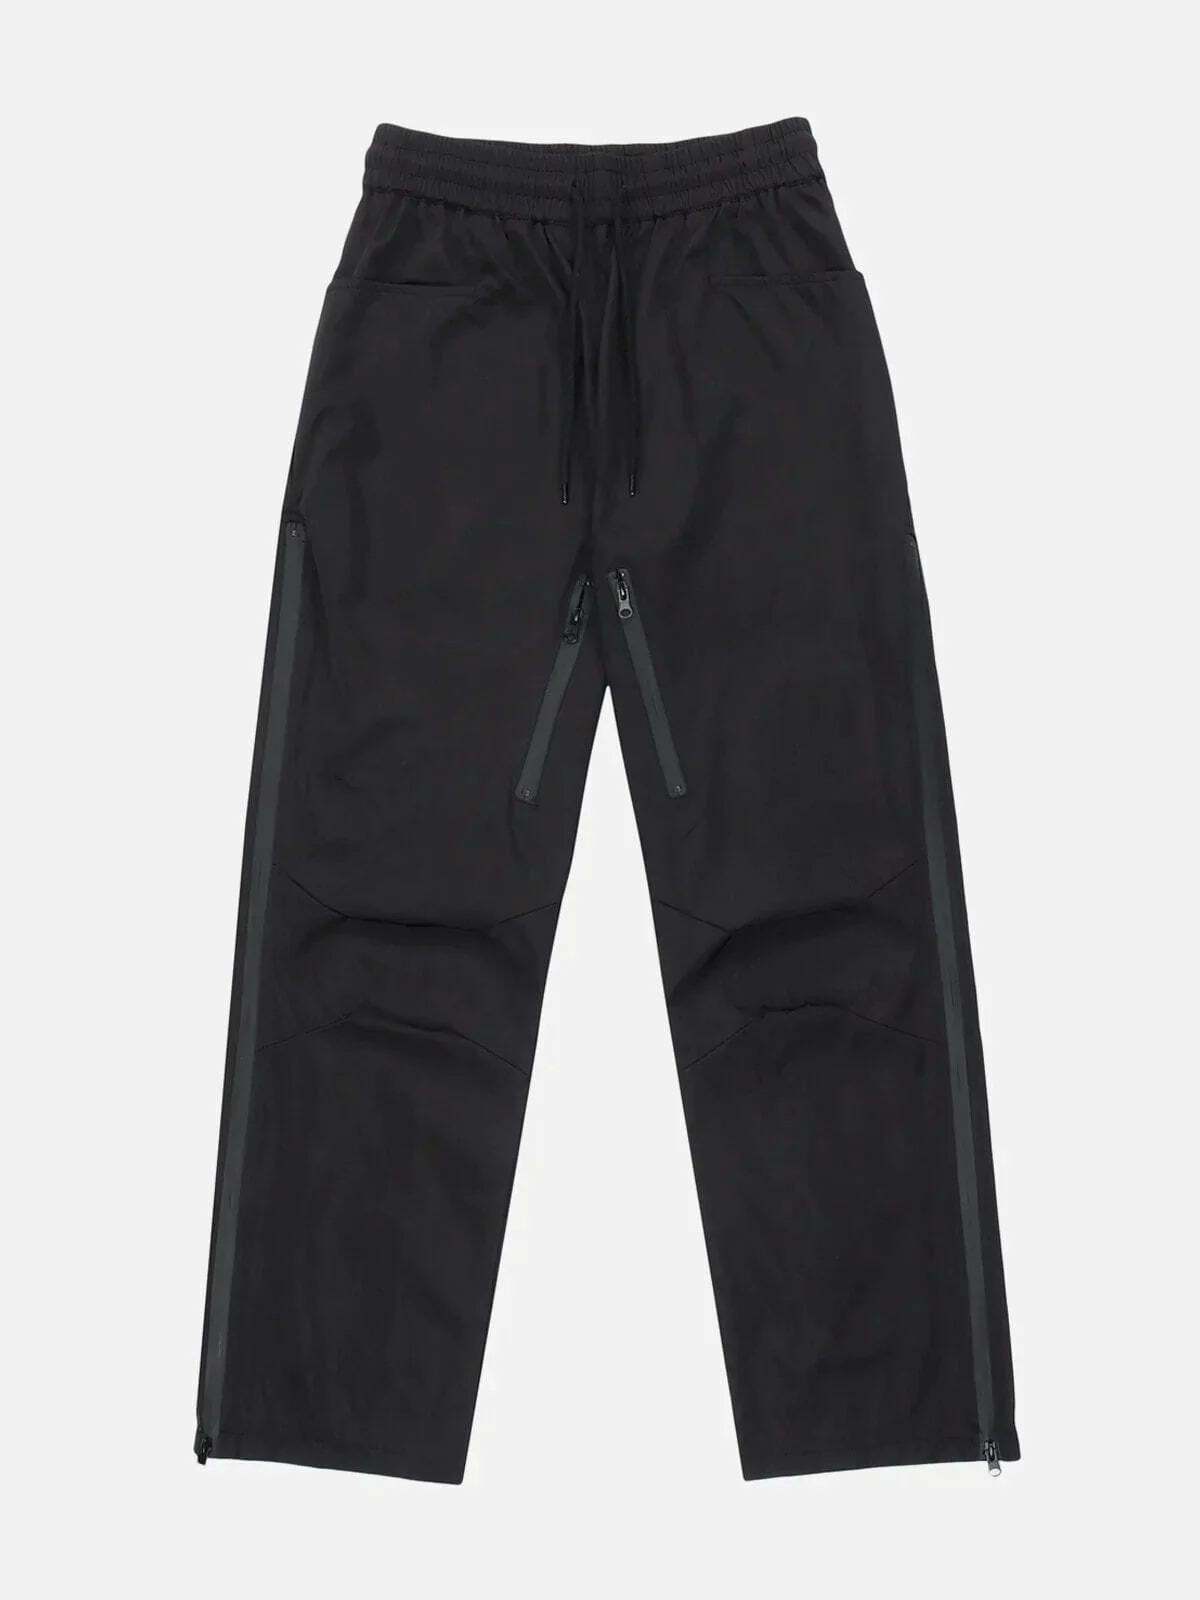 patchwork zipup pants edgy streetwear staple 1176